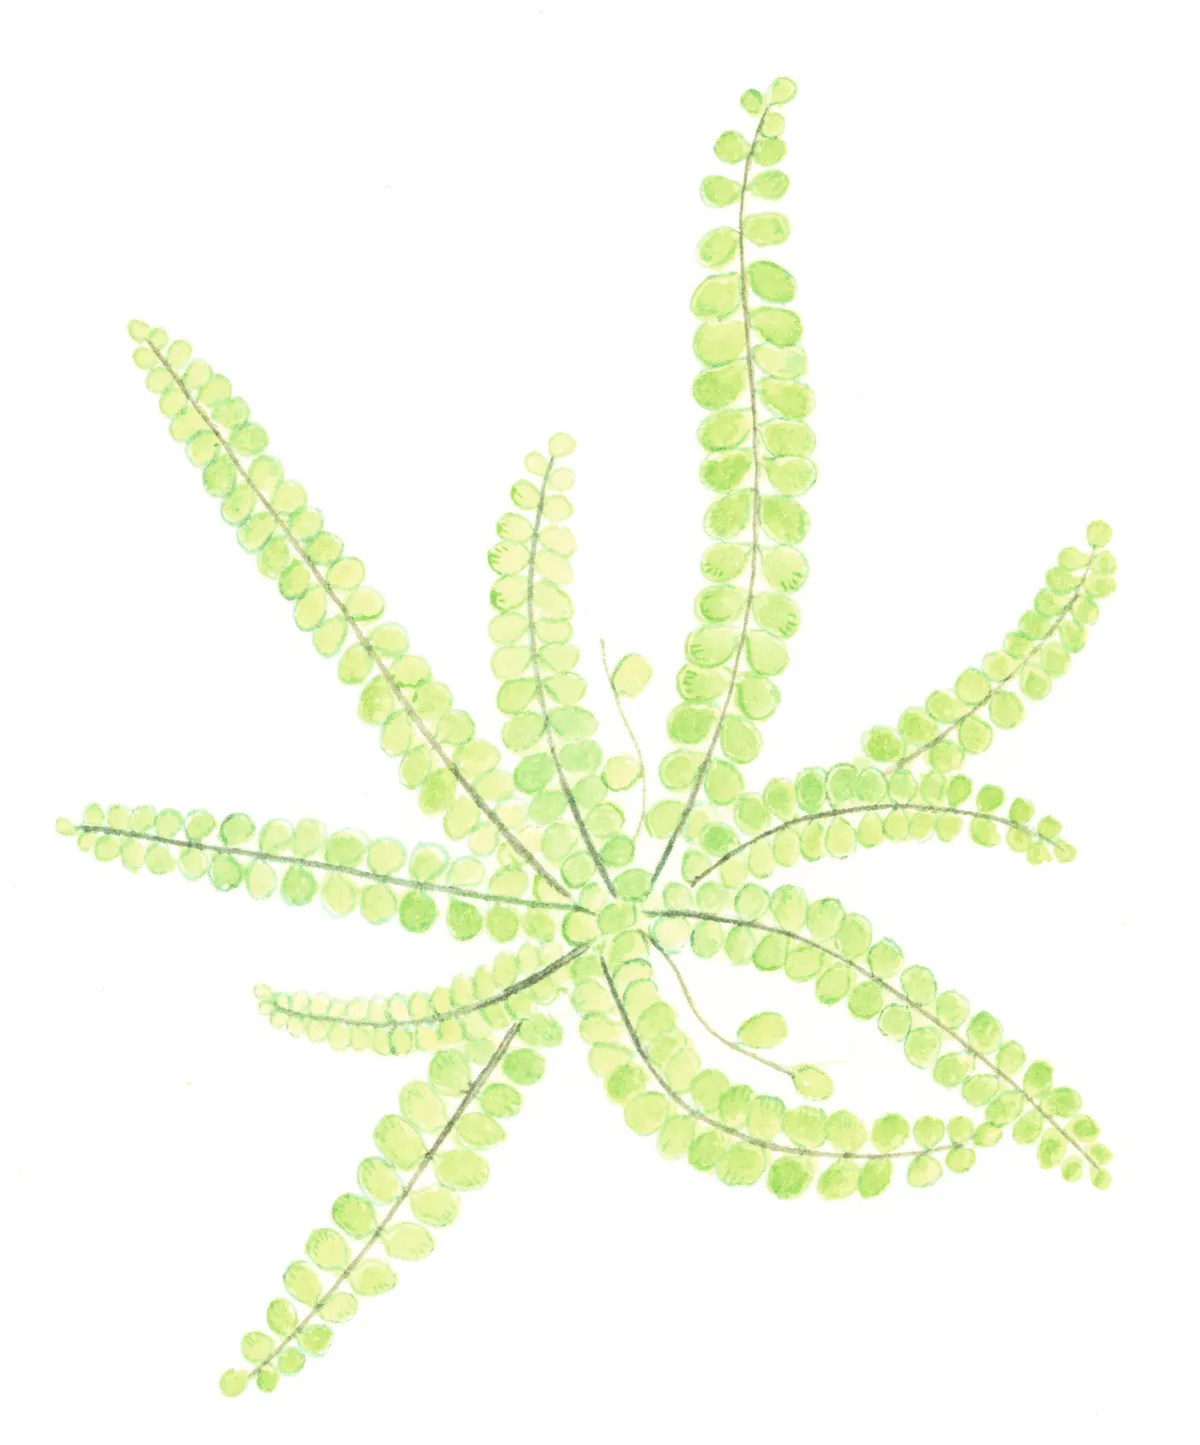 Maidenhair spleenwort. © Felicity Rose Cole